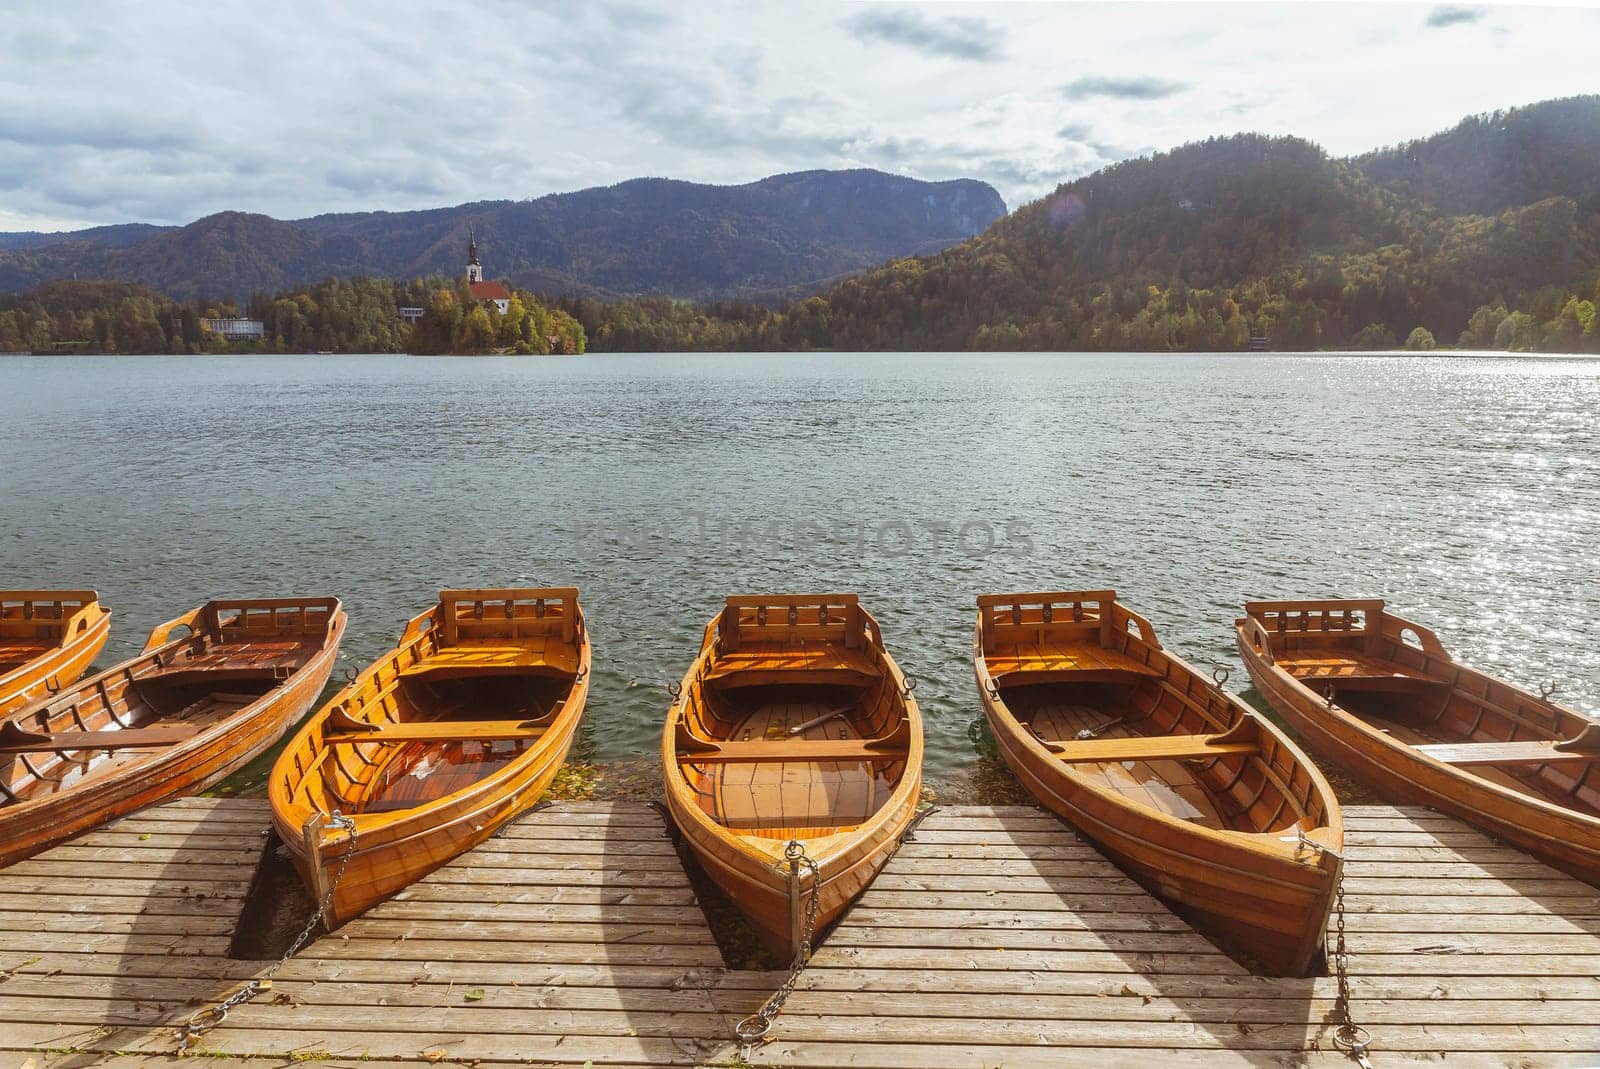 Wooden moored boats on Lake Blaysko in Slovenia.